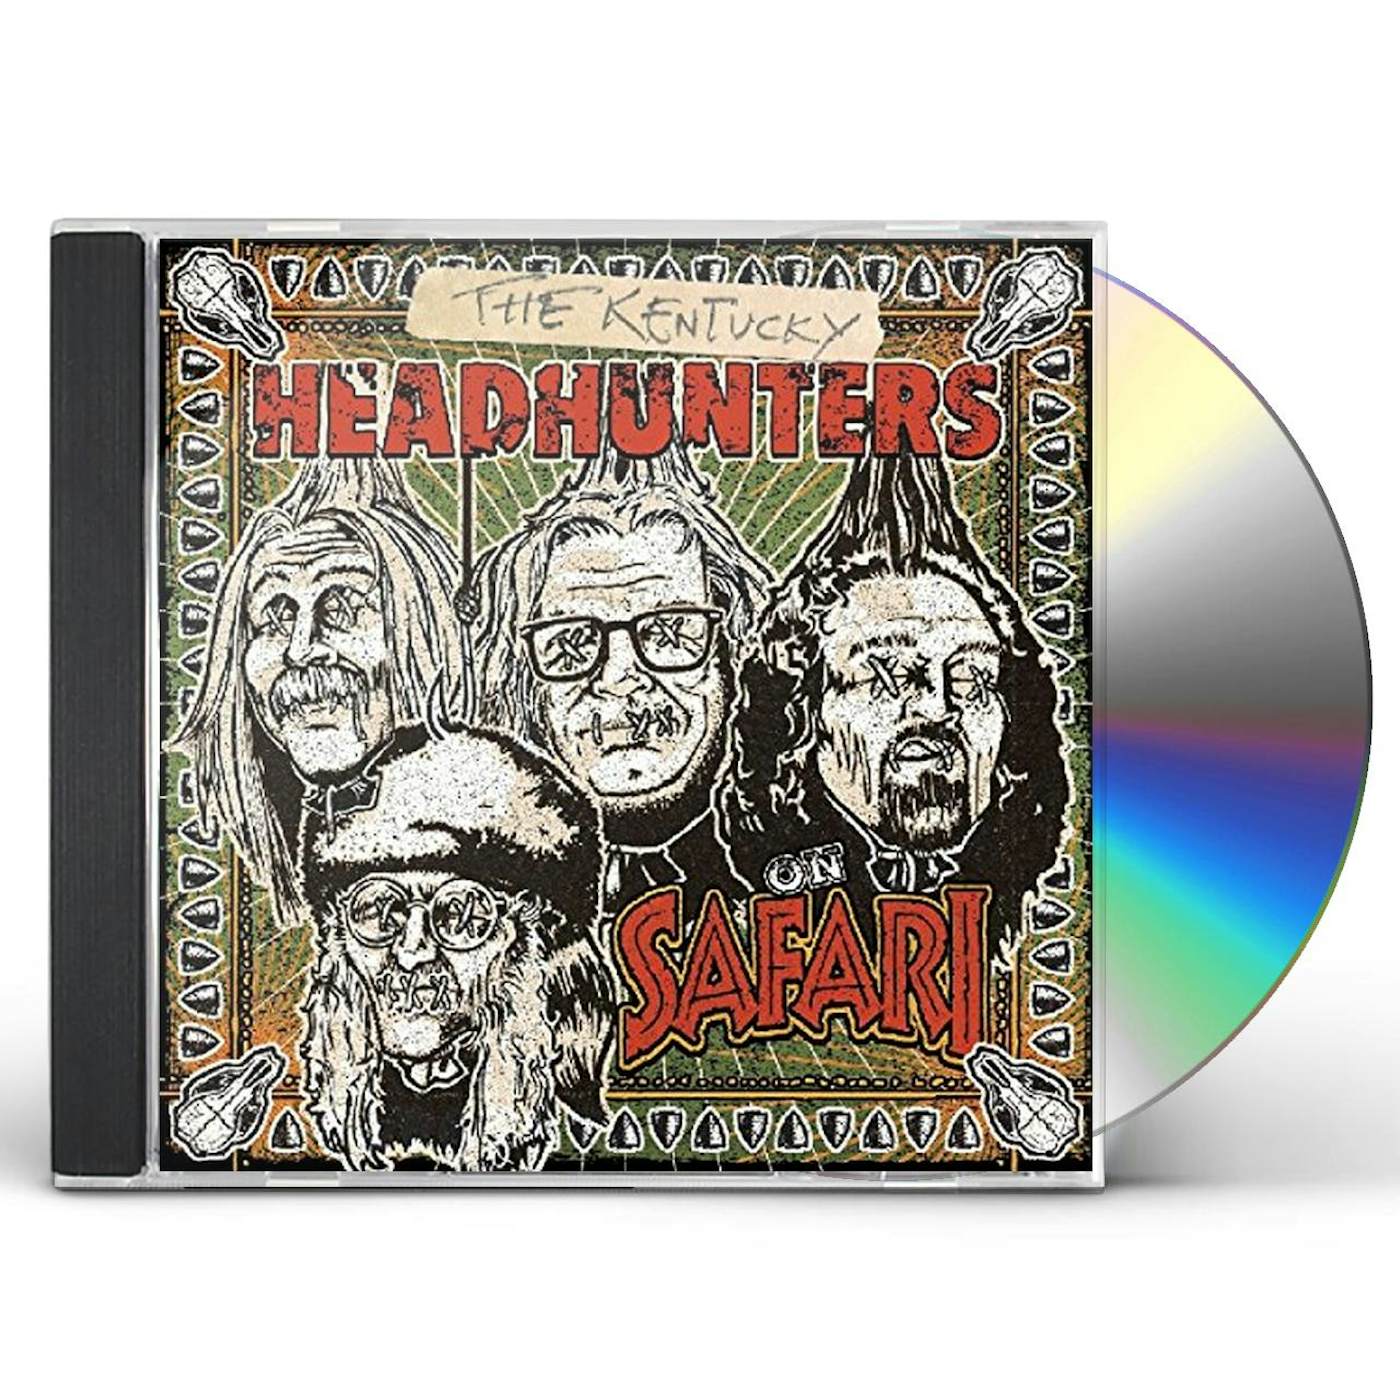 The Kentucky Headhunters ON SAFARI CD